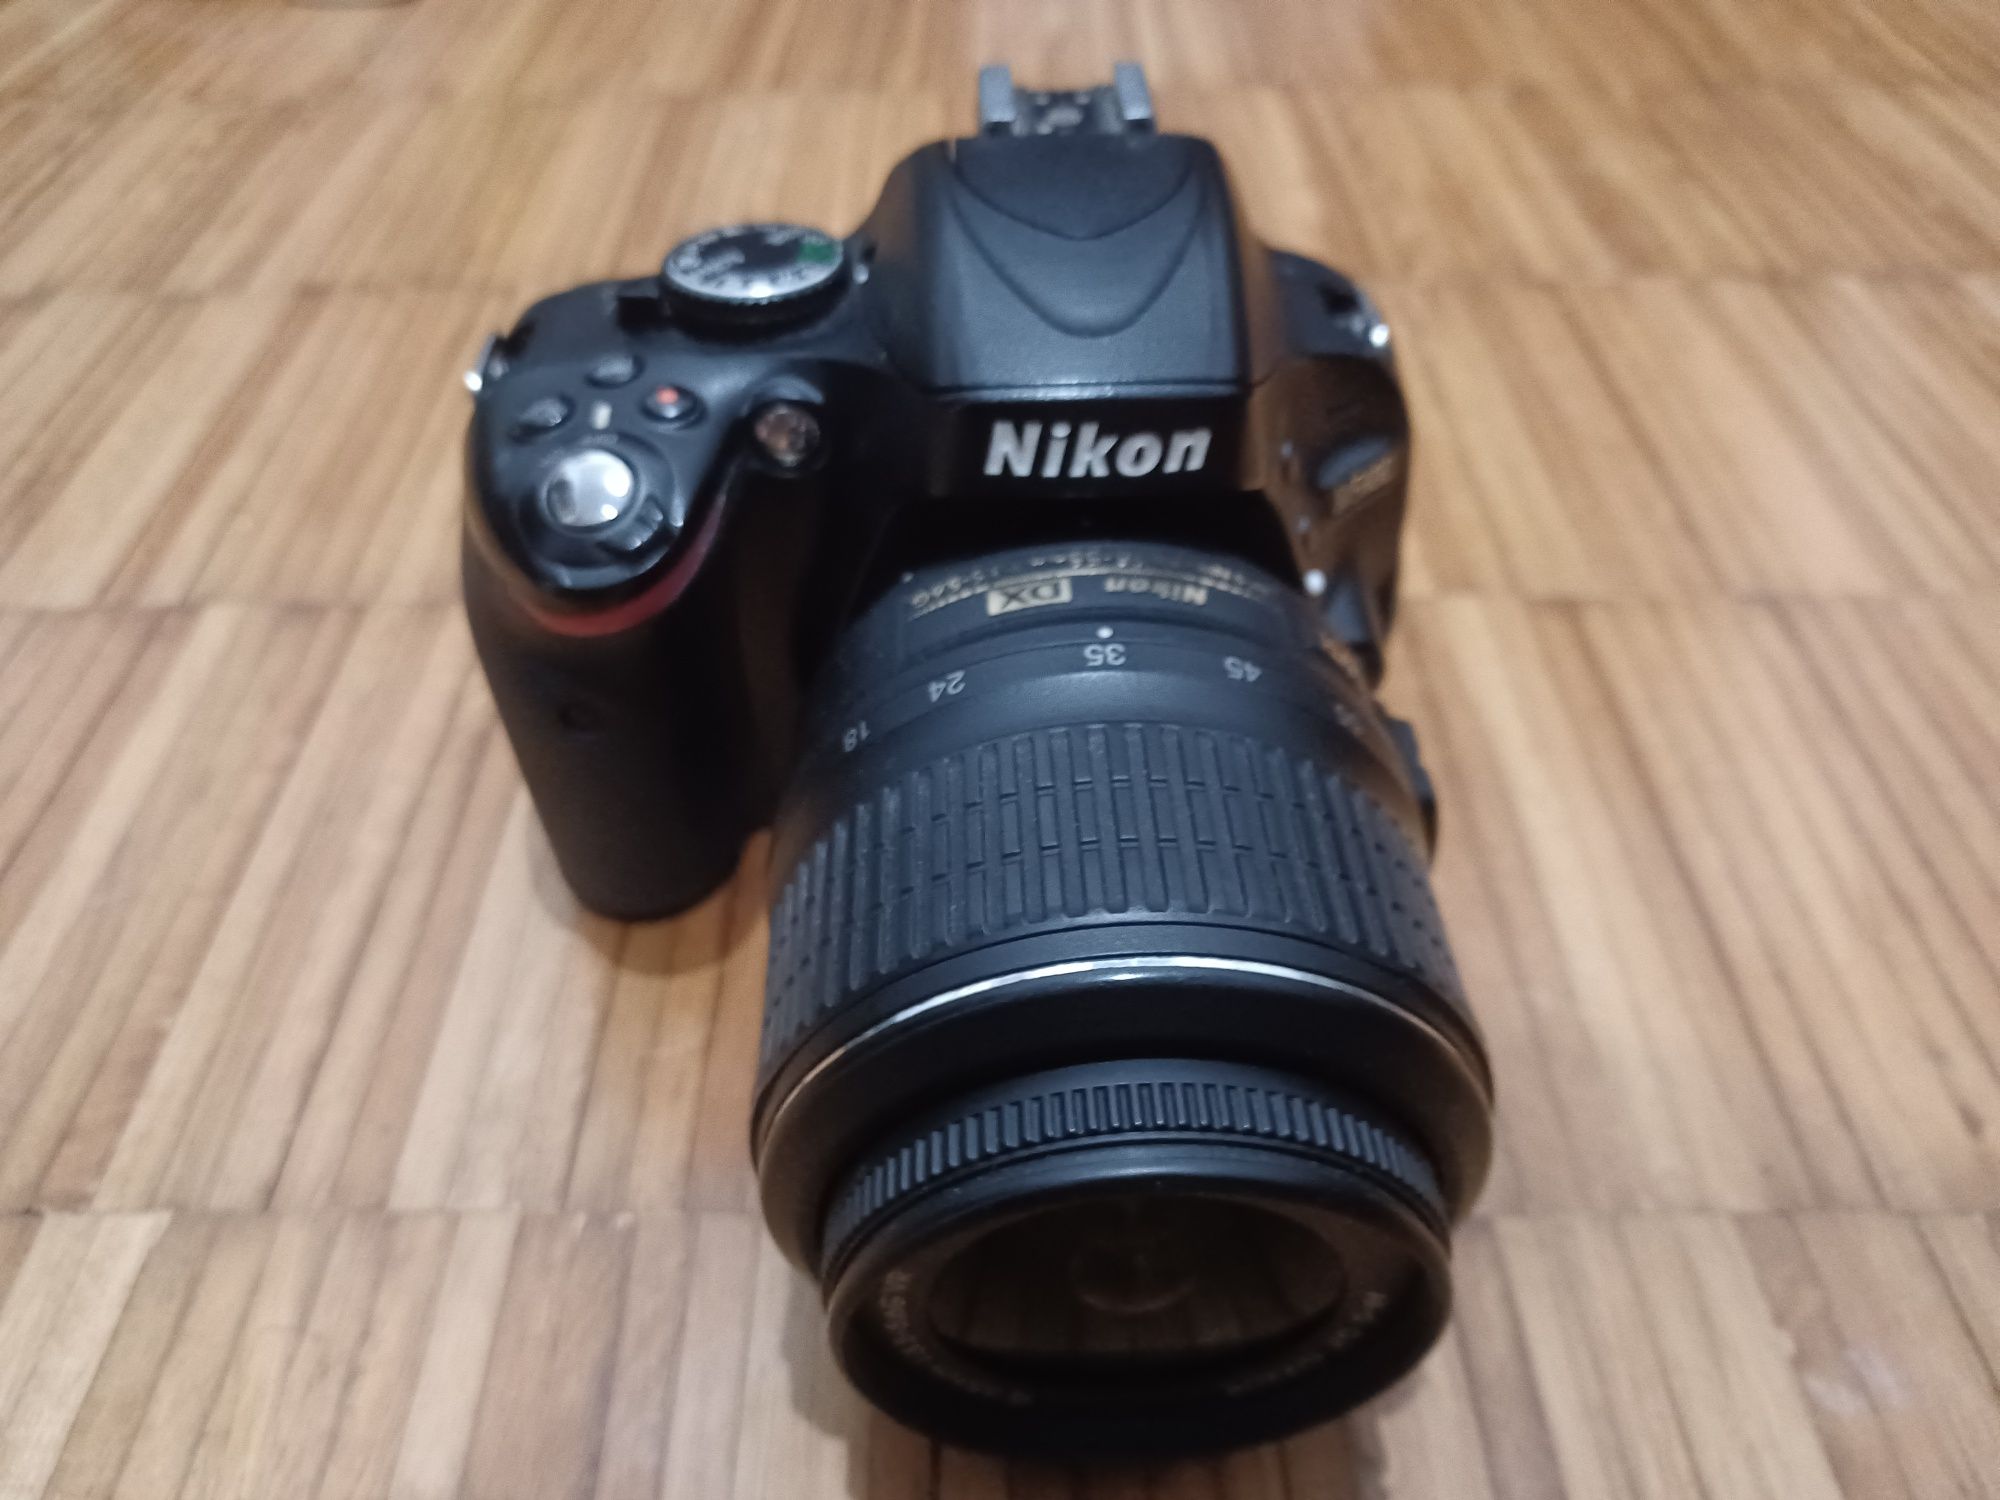 Nikon D5100 + Objetiva 18-55mm + 3 baterias